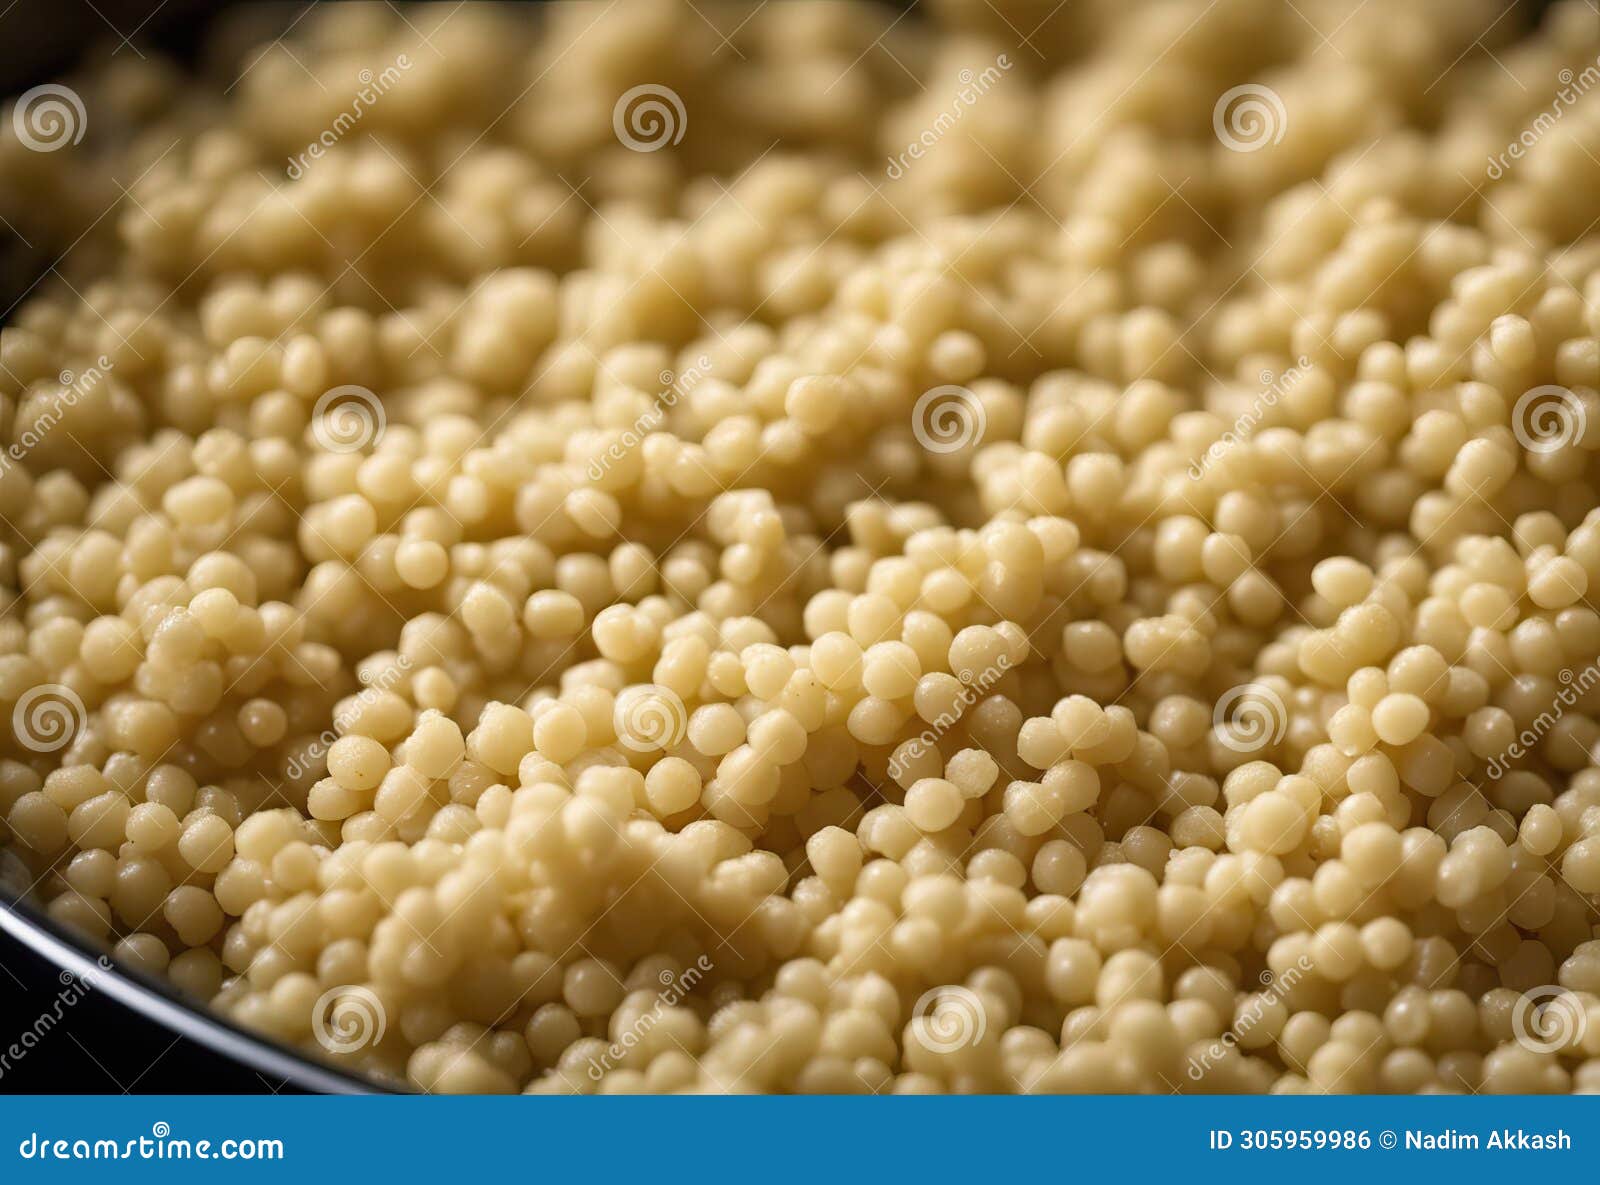 vertical shot of couscous semolina on a steamer. semolina cooking texture backgrounds